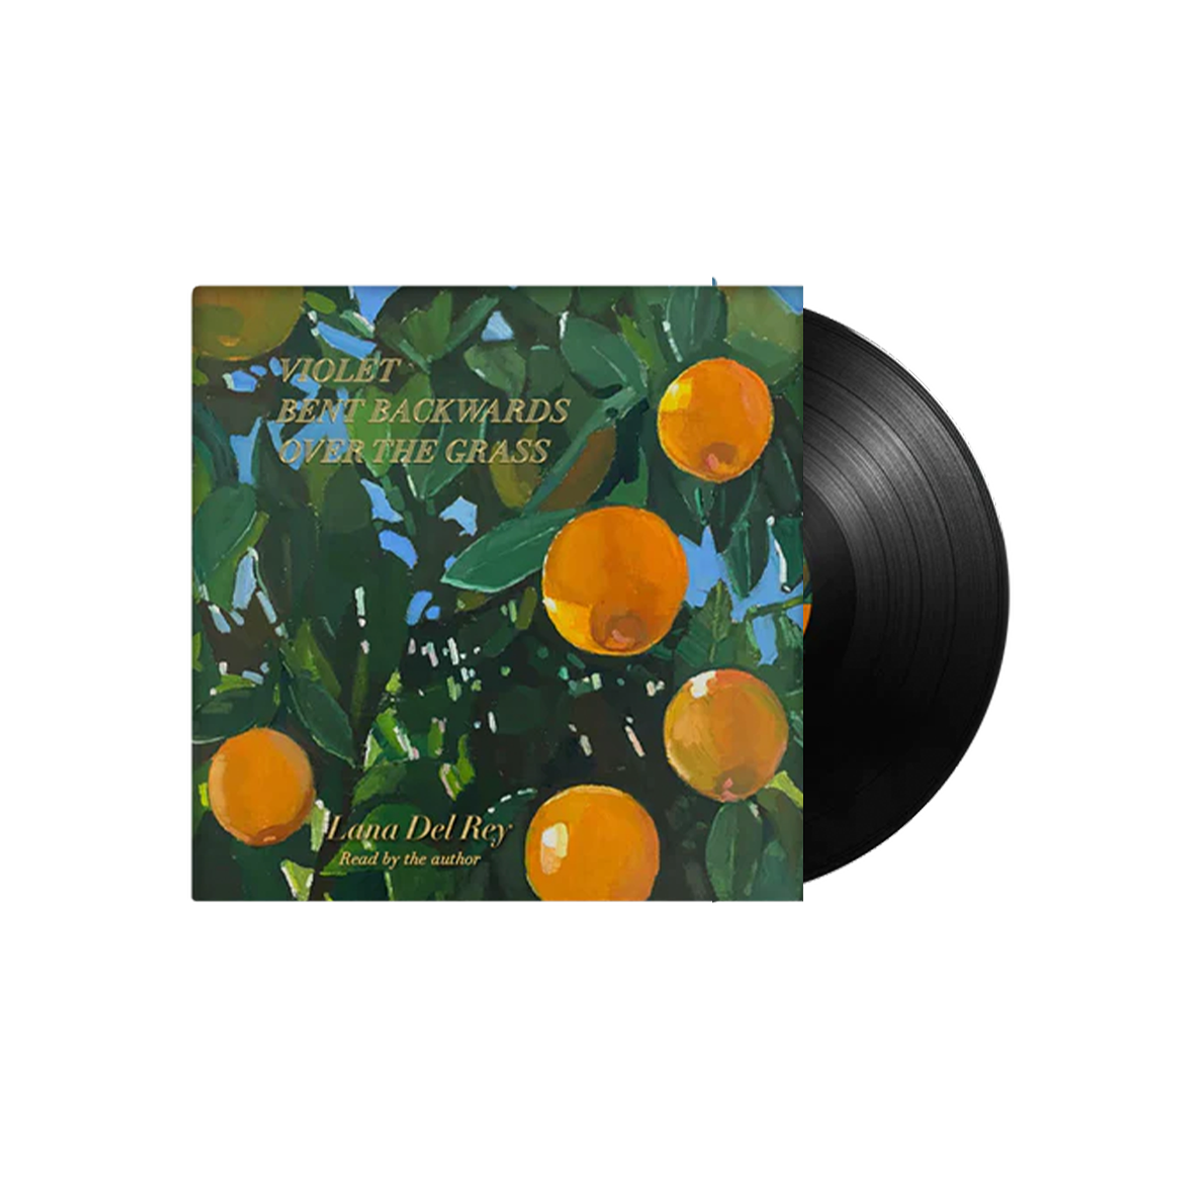 Lana Del Rey - Violet Bent Backwards Over The Grass: Vinyl LP